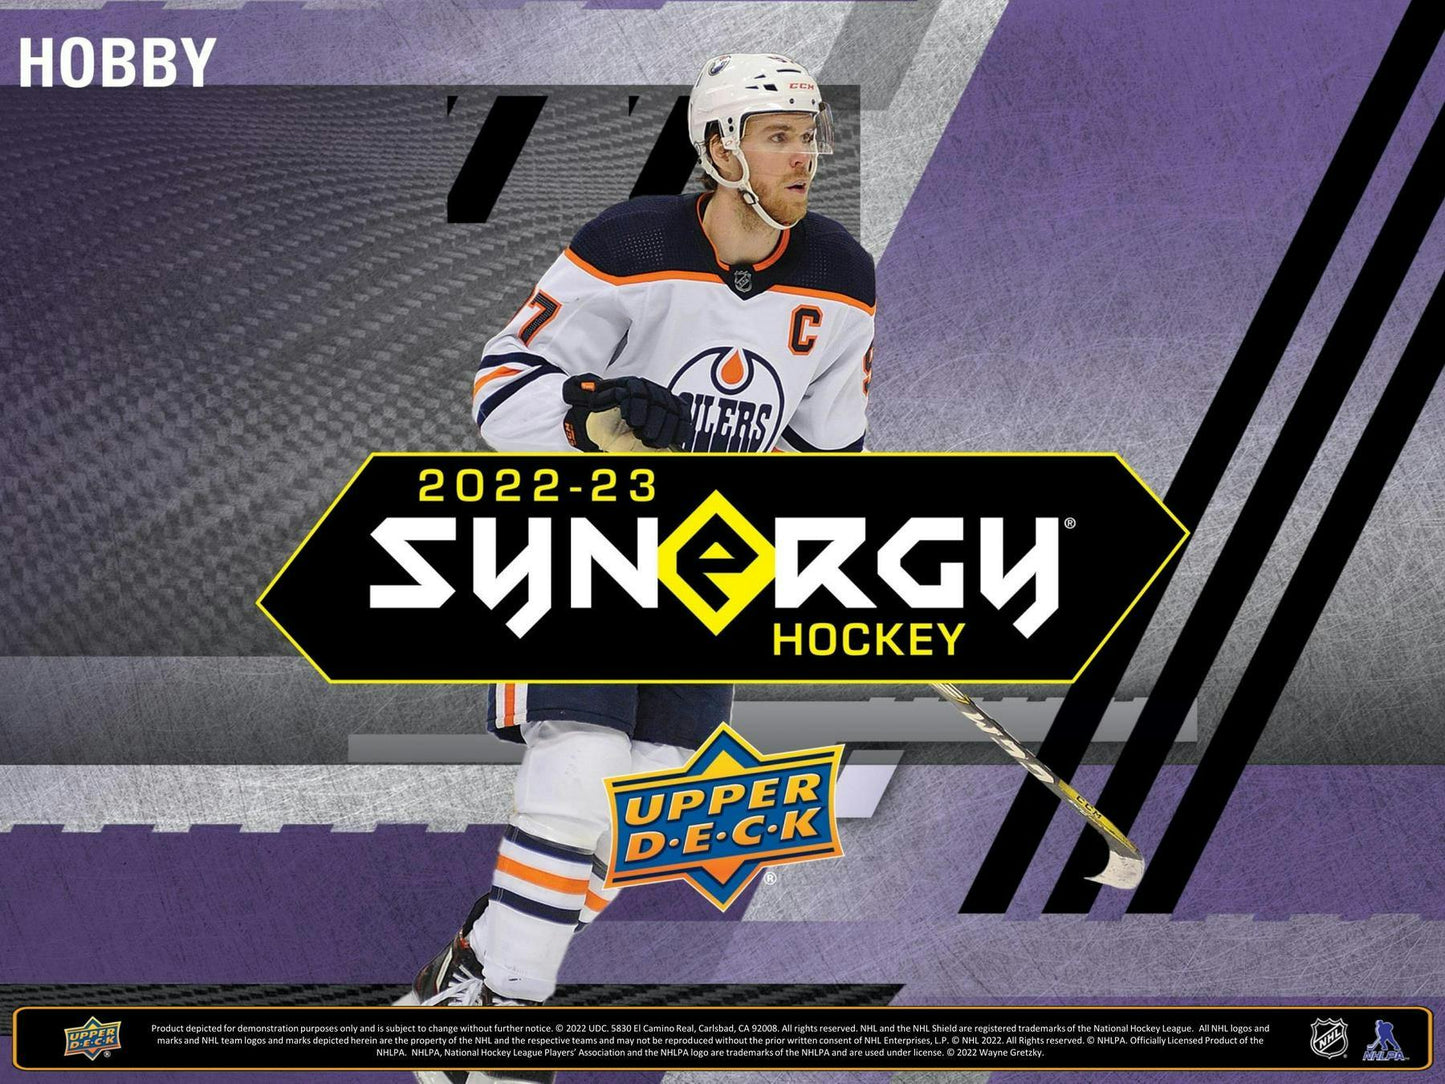 2022-23 Upper Deck Synergy Hockey, Hobby Box